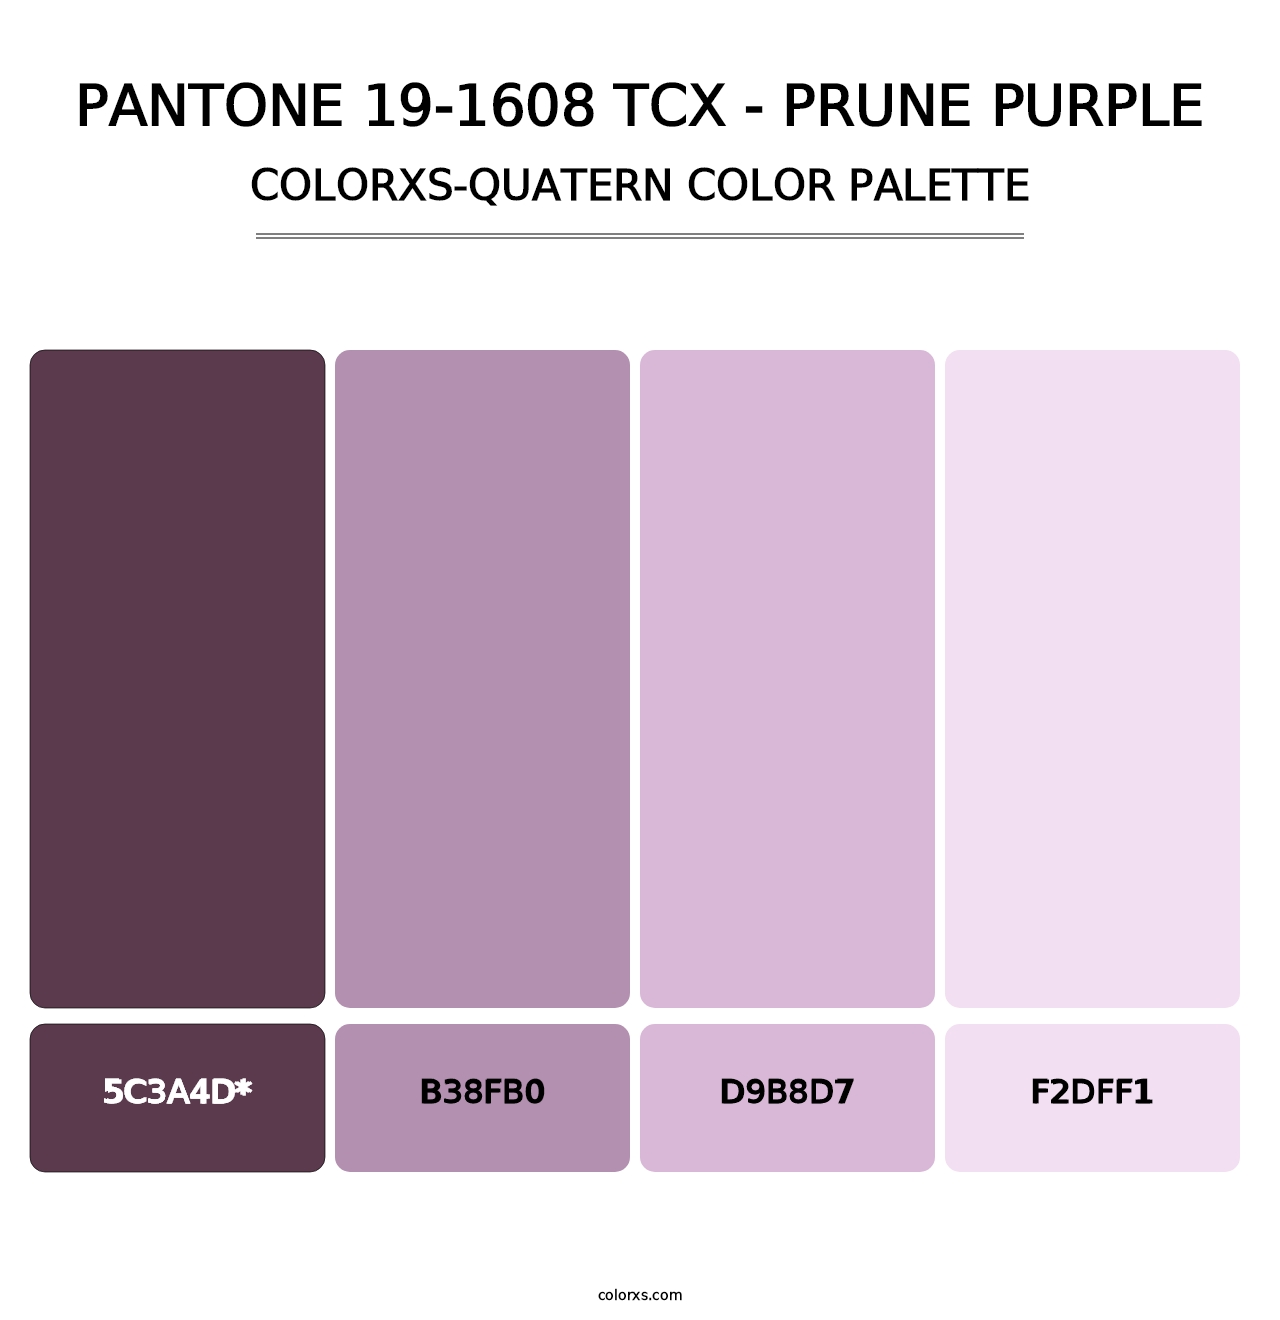 PANTONE 19-1608 TCX - Prune Purple - Colorxs Quatern Palette